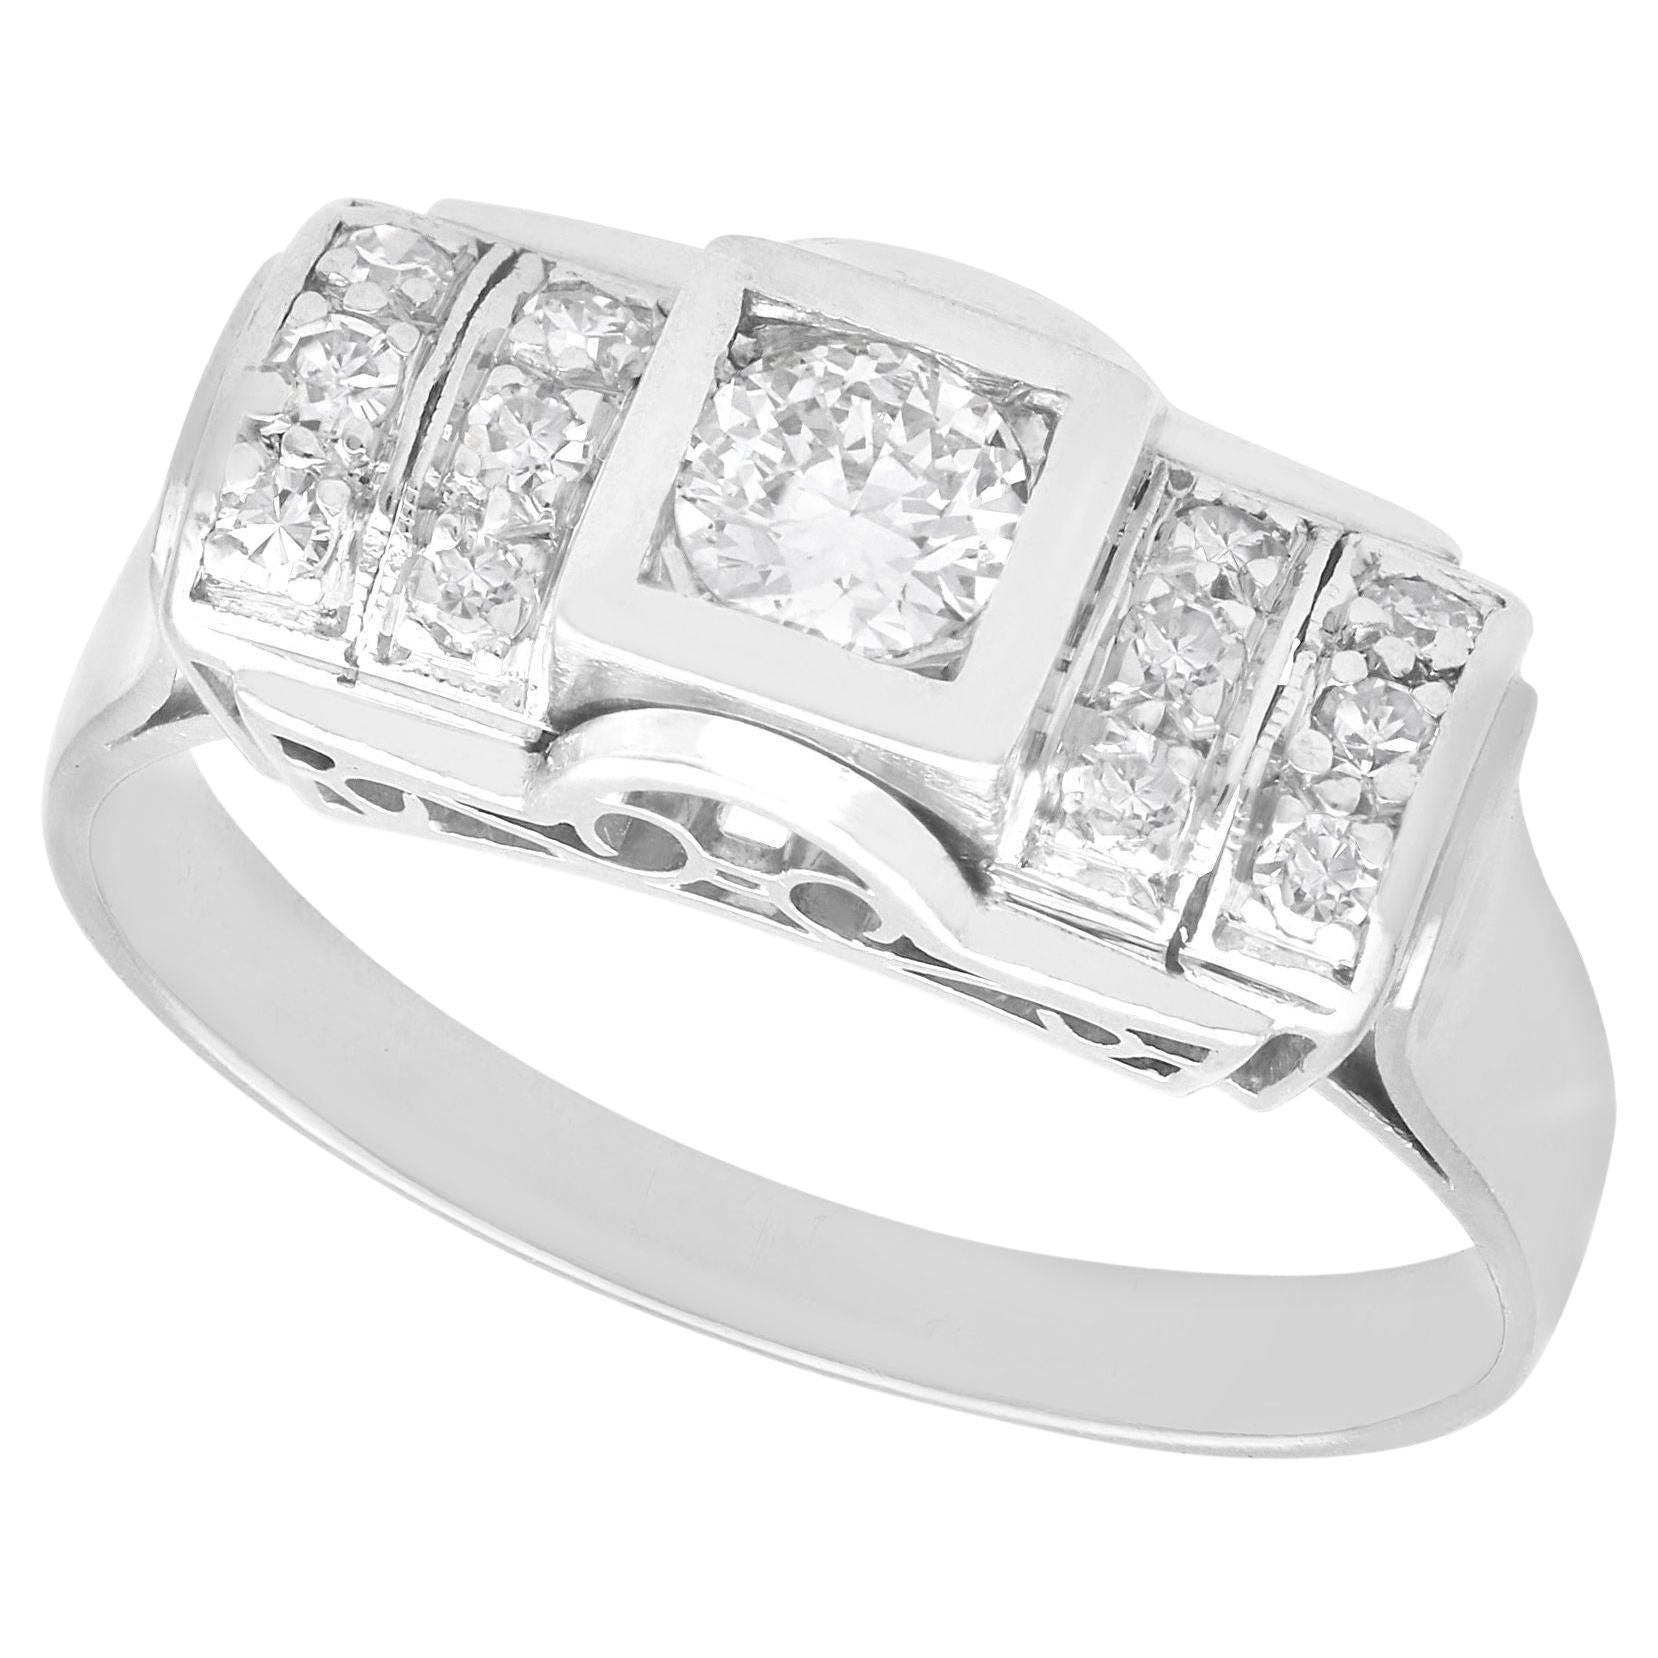 Vintage 1950s Art Deco Diamond and Platinum Ring